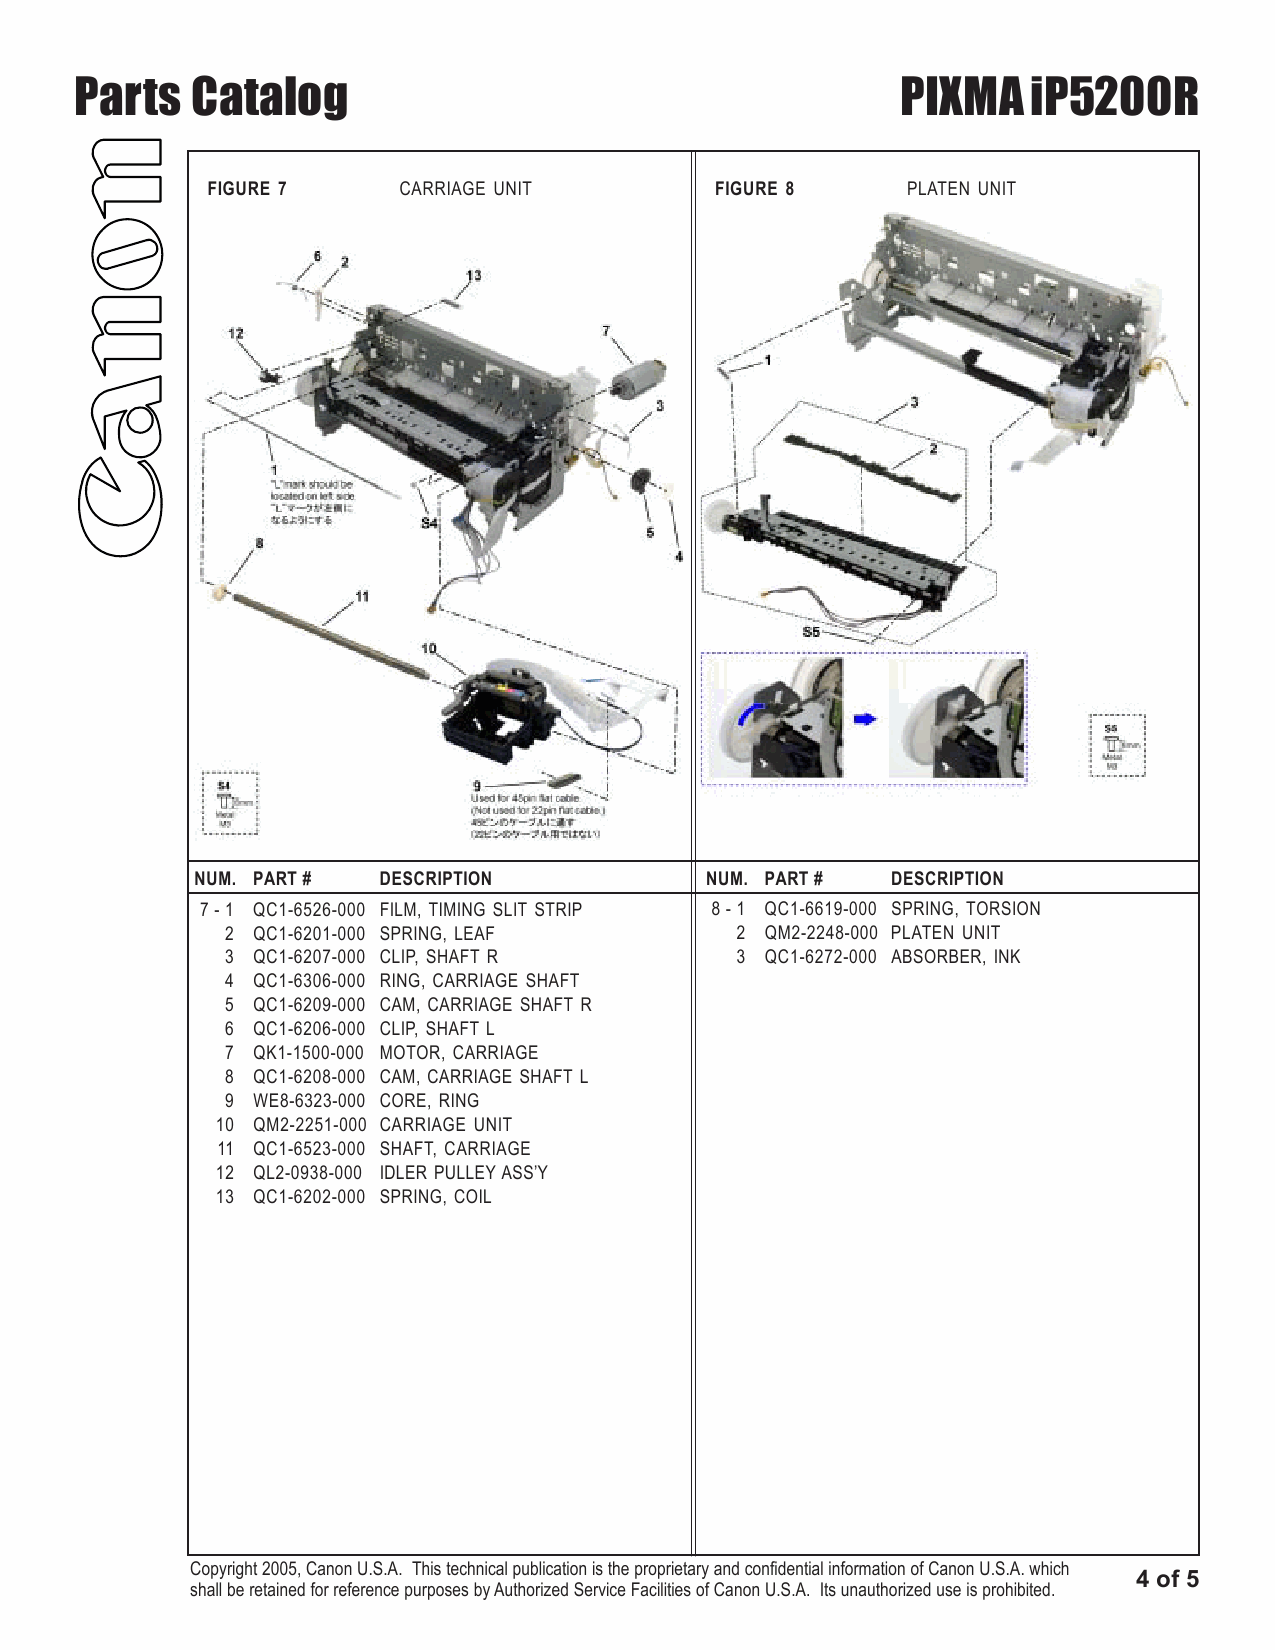 Canon PIXMA iP5200R Parts Catalog-5